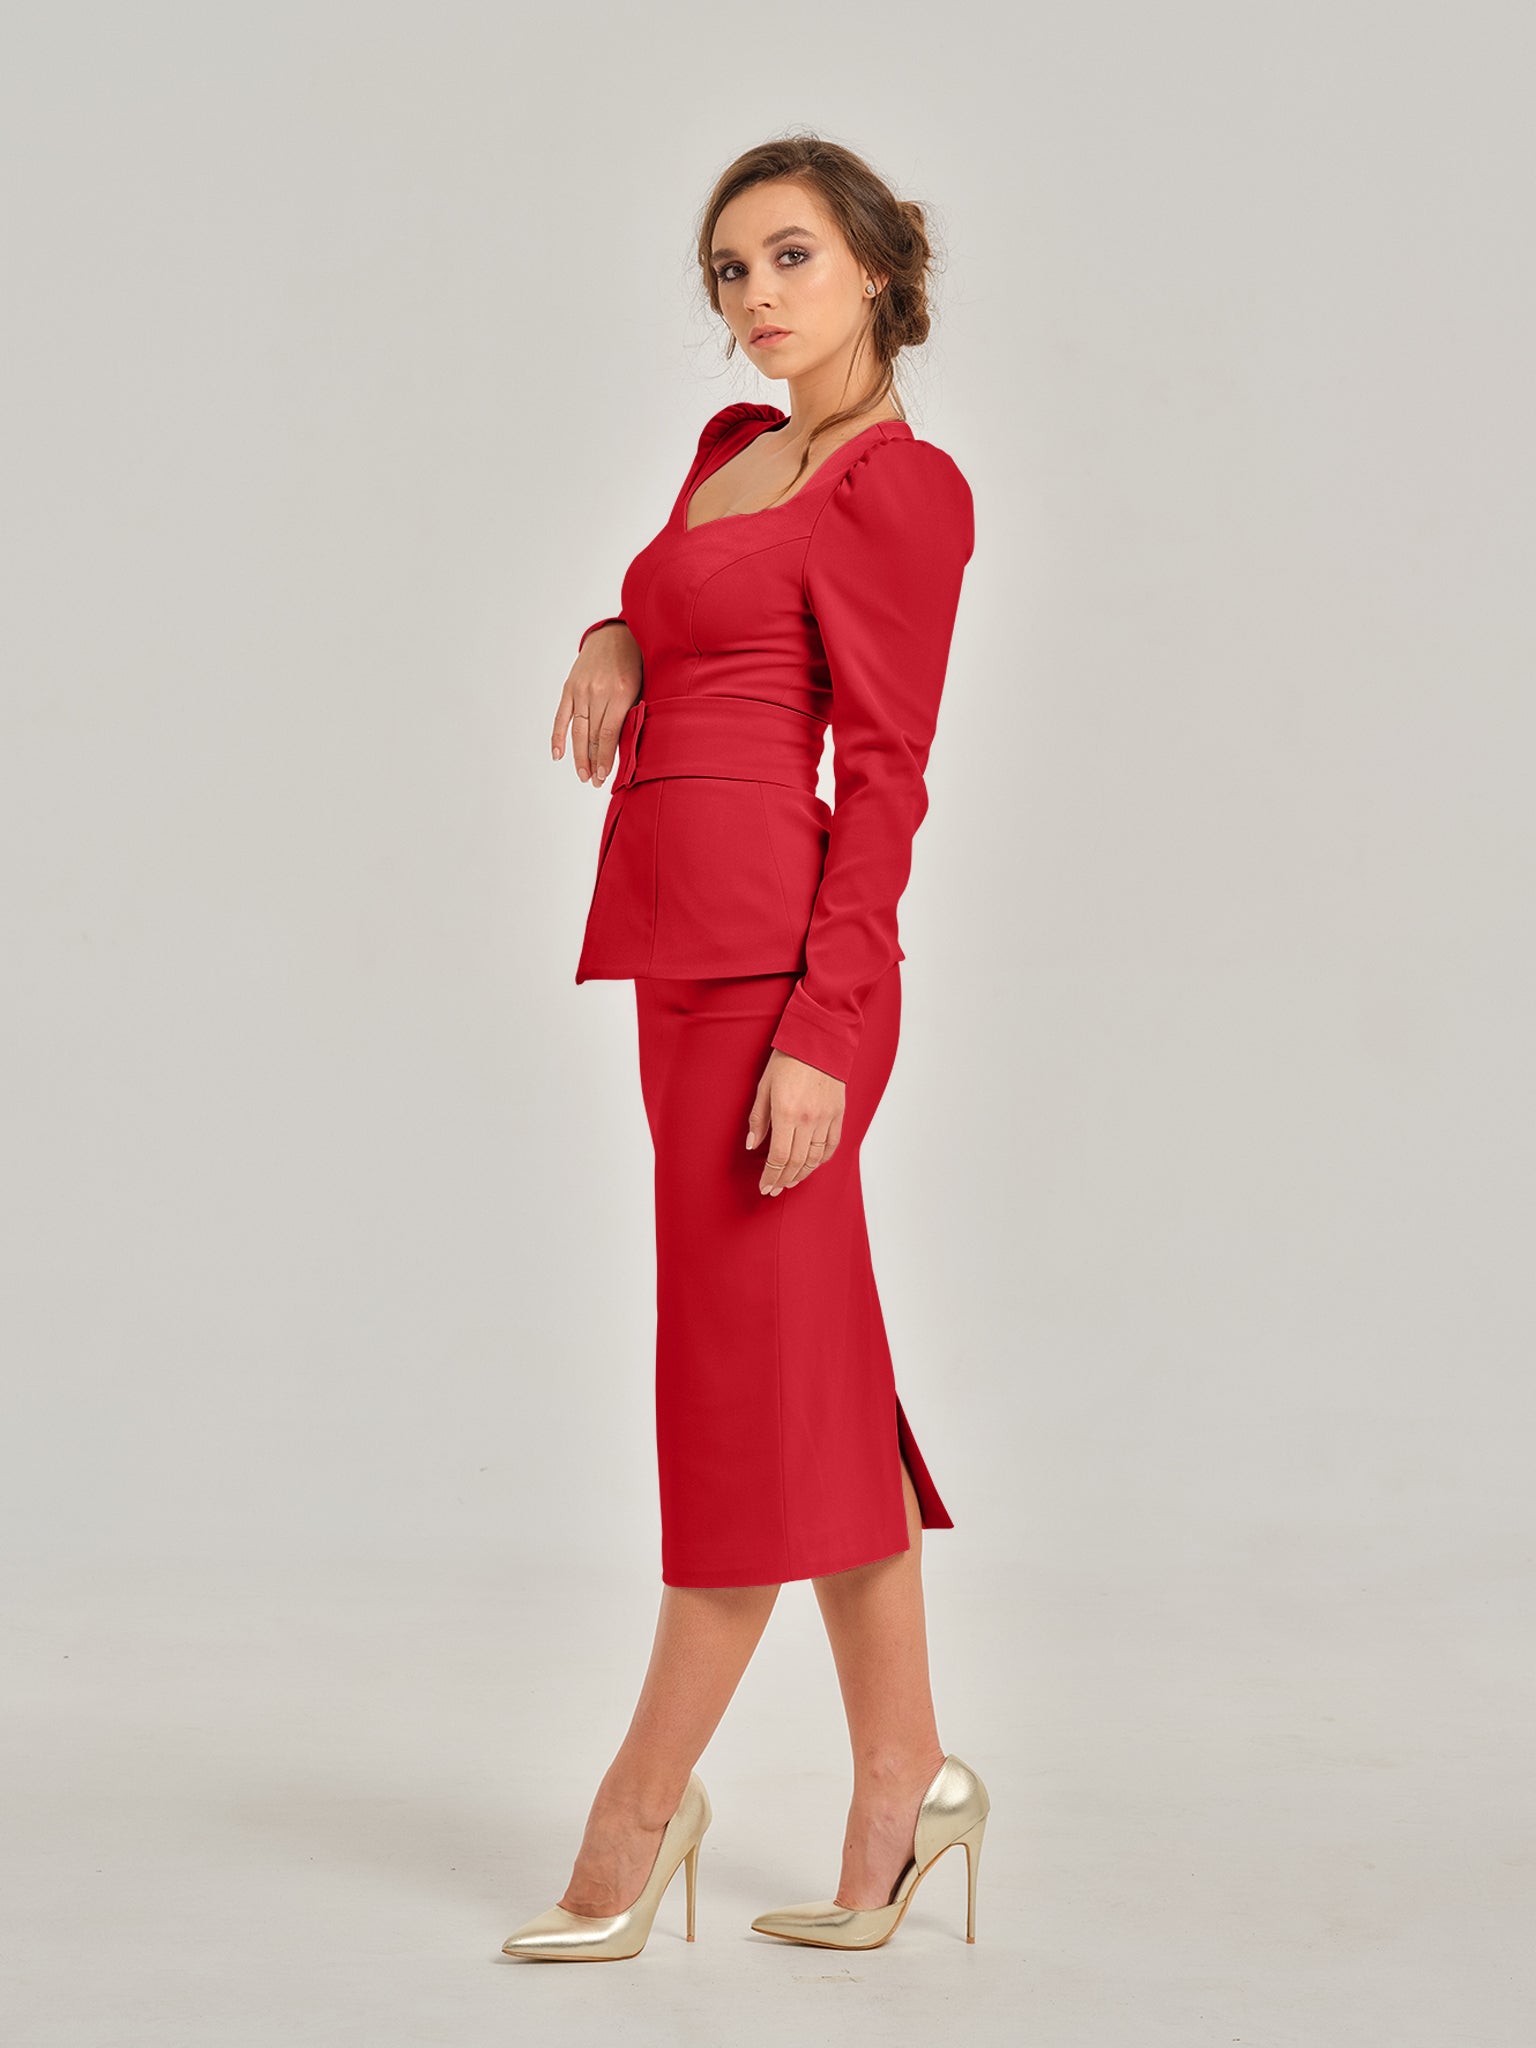 Fierce Red High-Waist Pencil Midi Skirt by Tia Dorraine Women's Luxury Fashion Designer Clothing Brand